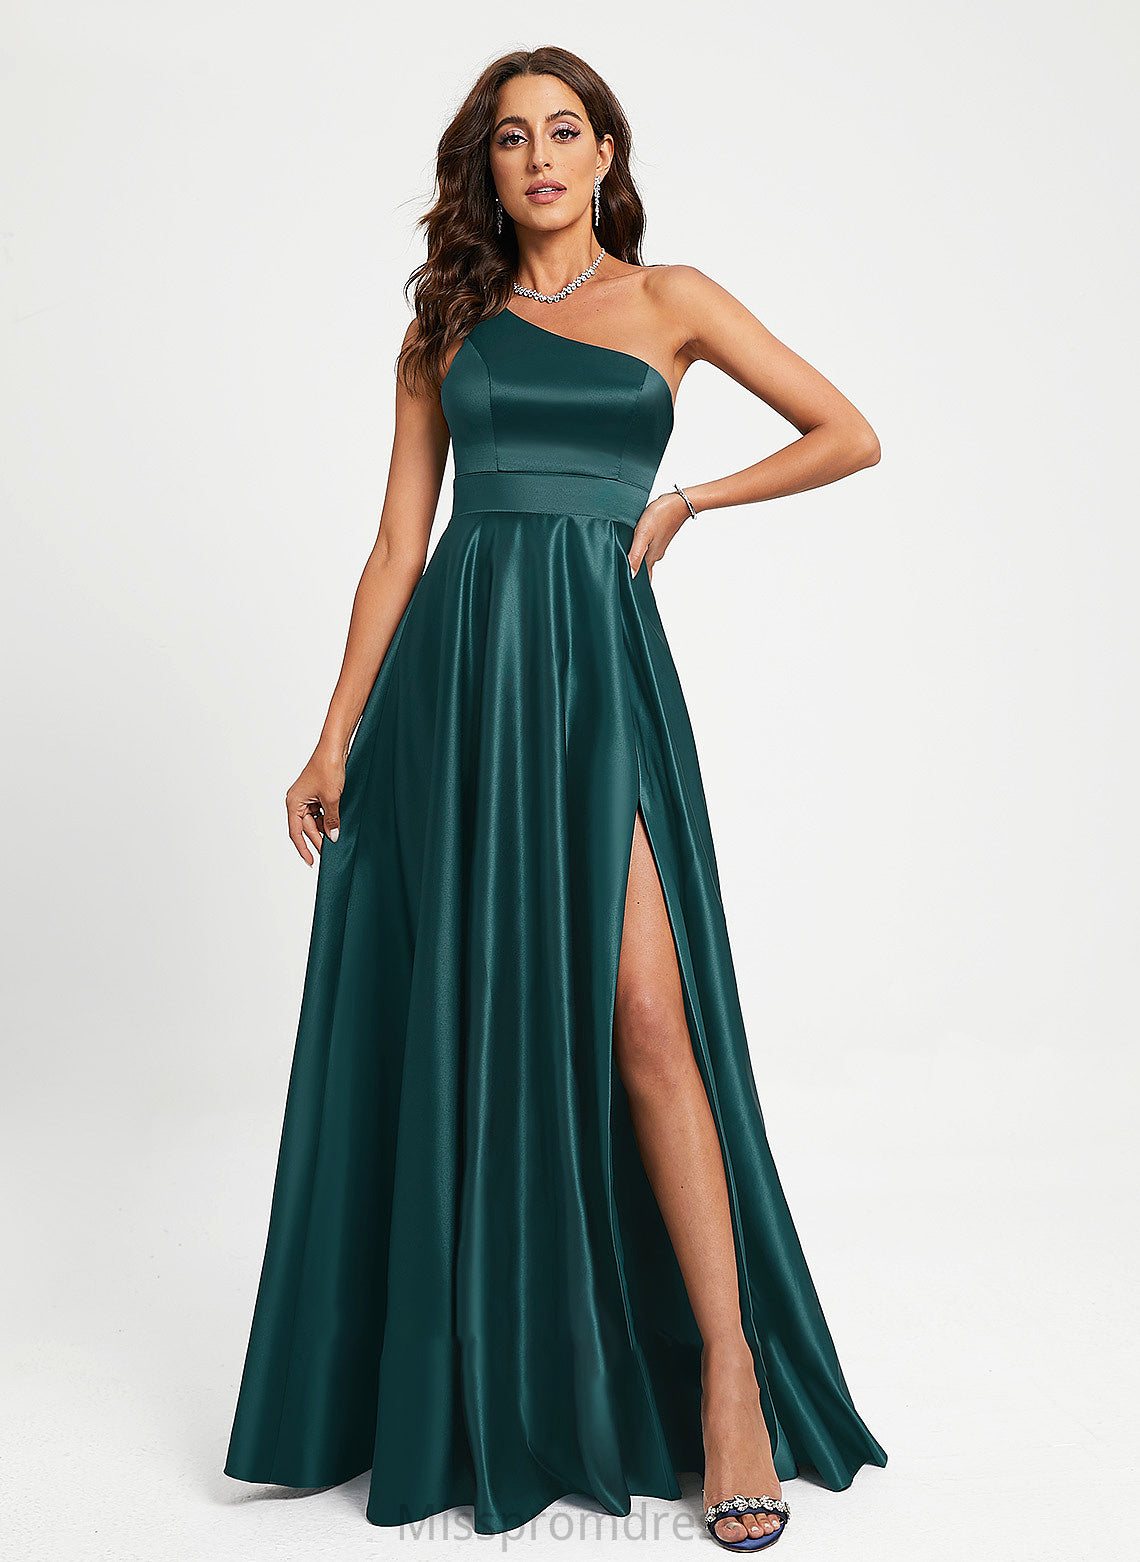 Beading With A-Line Rowan Prom Dresses Satin Floor-Length One-Shoulder